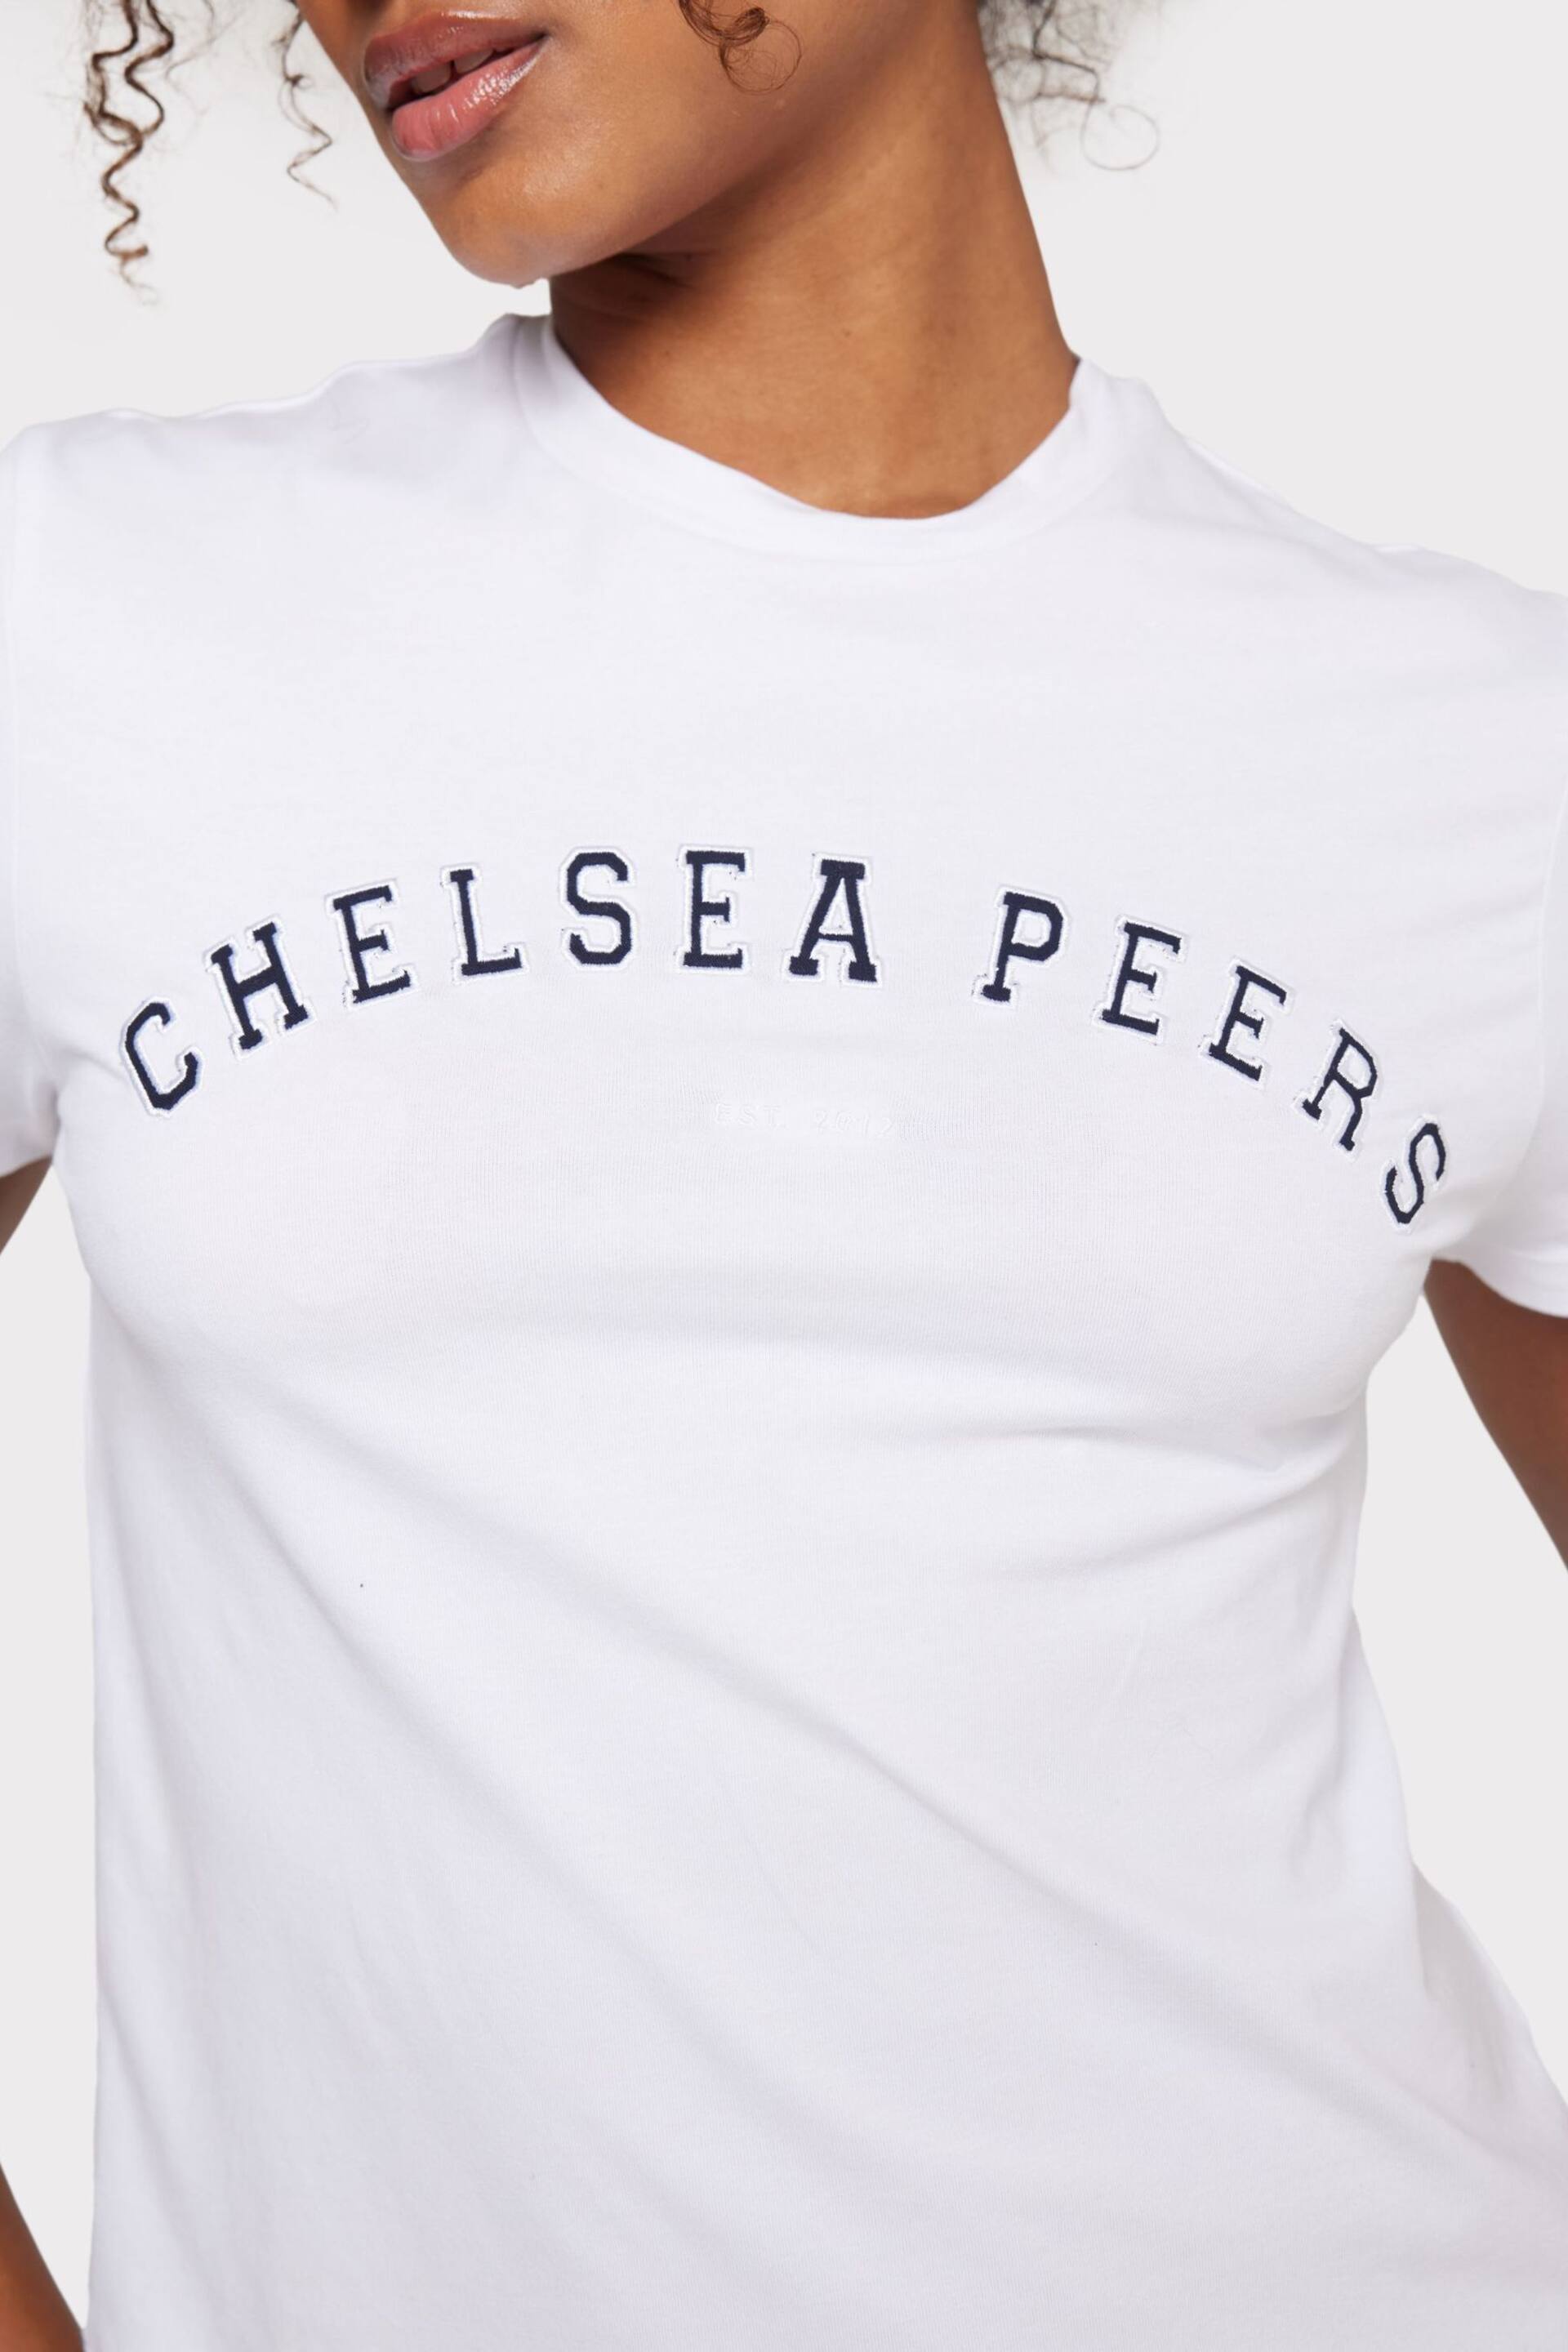 Chelsea Peers White Organic Cotton Logo Crop T-Shirt - Image 2 of 5